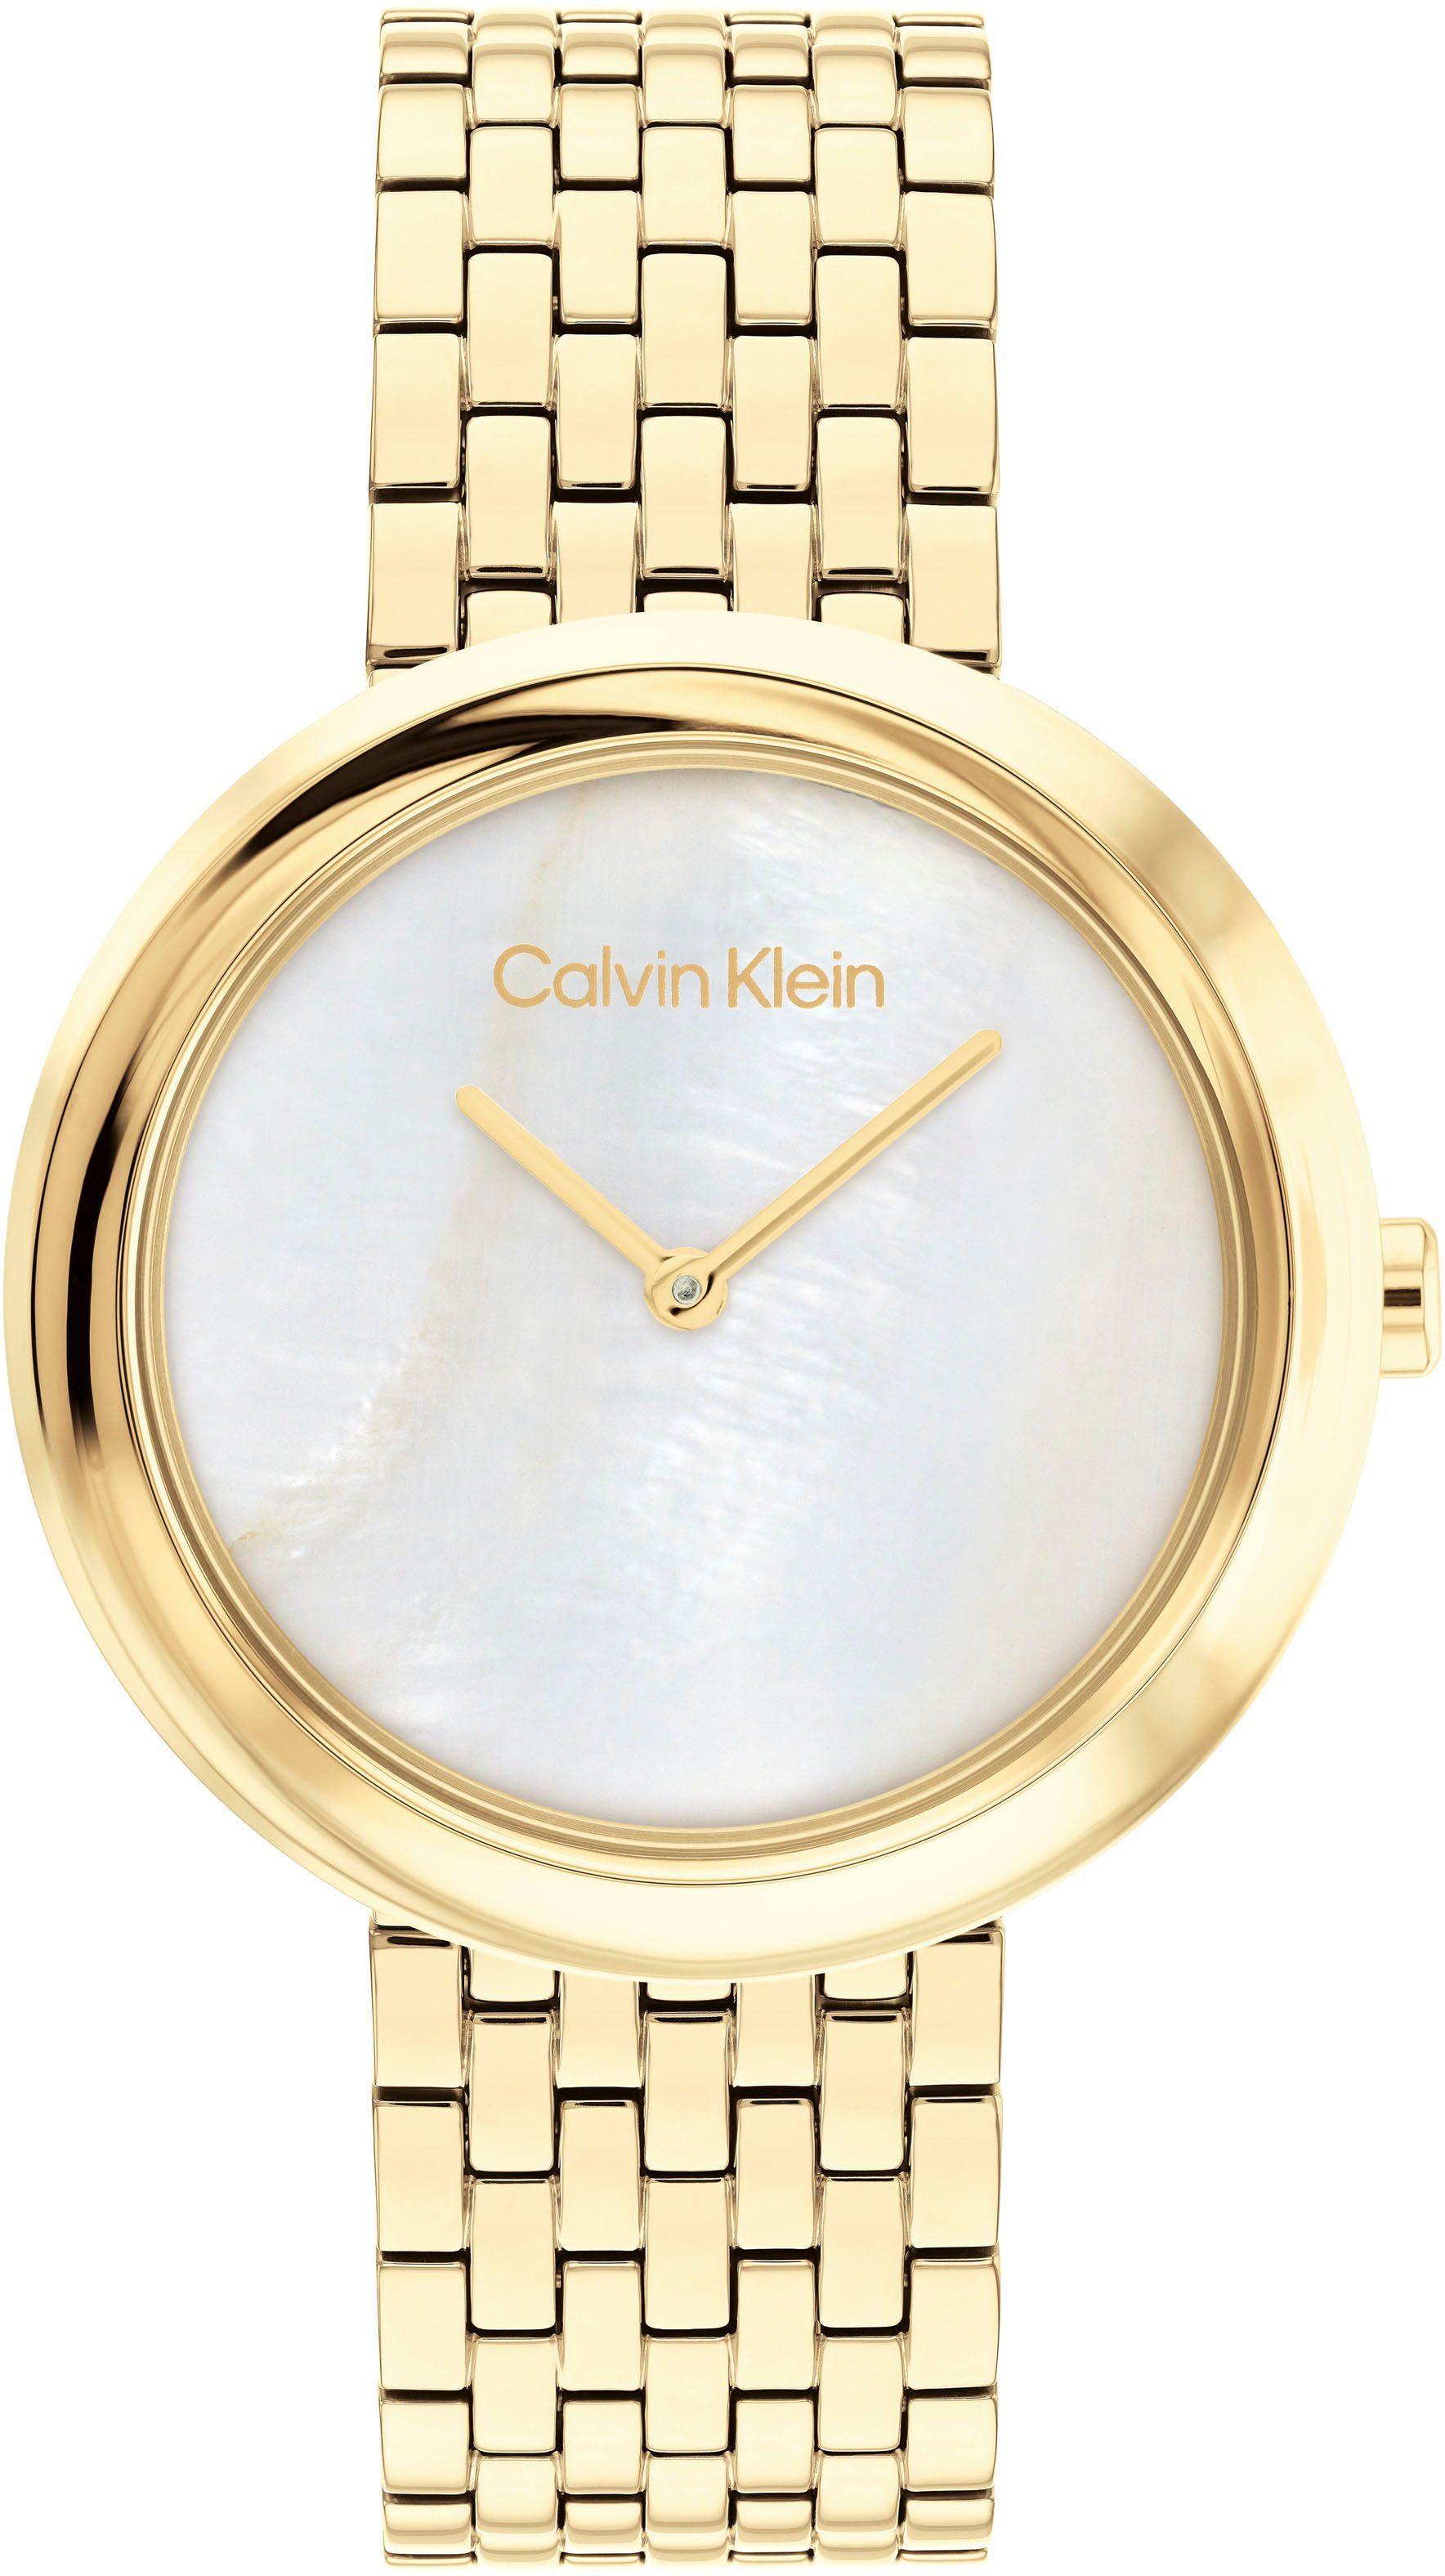 Calvin Klein Quarzuhr TWISTED BEZEL, 25200321, Armbanduhr, Damenuhr, Perlmutt-Zifferblatt